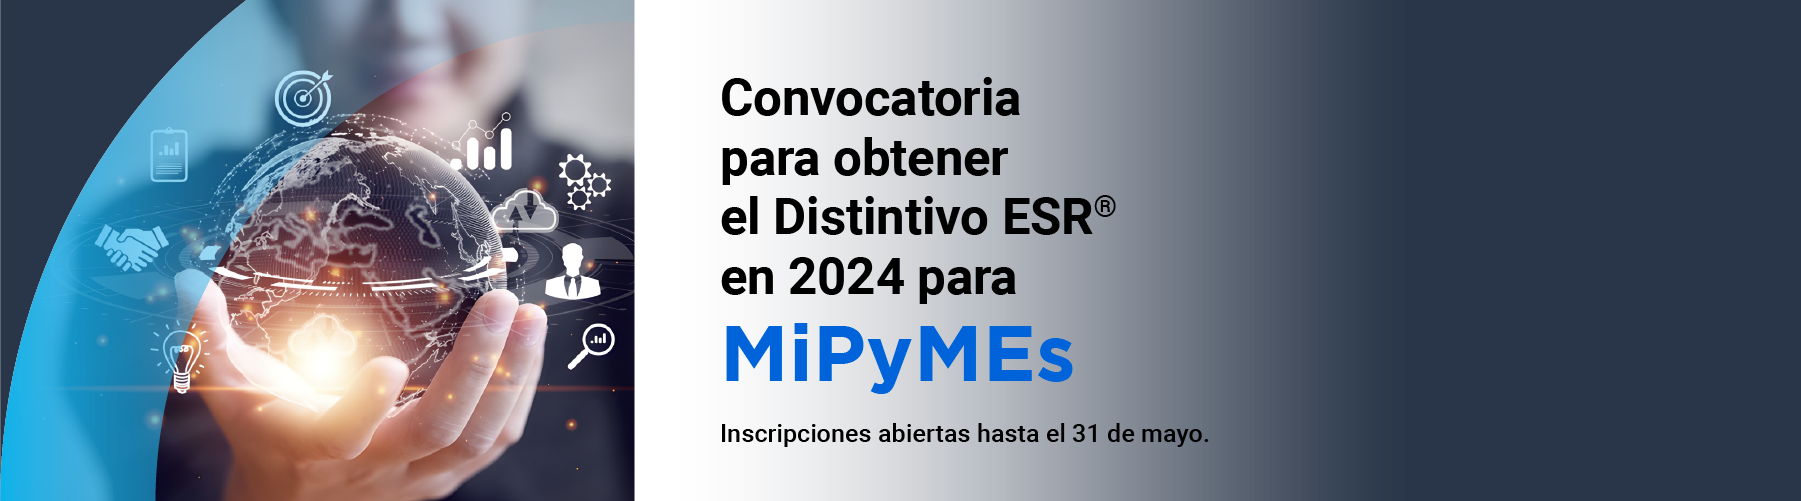 Convocatoria Distintivo ESR Mipymes 2024